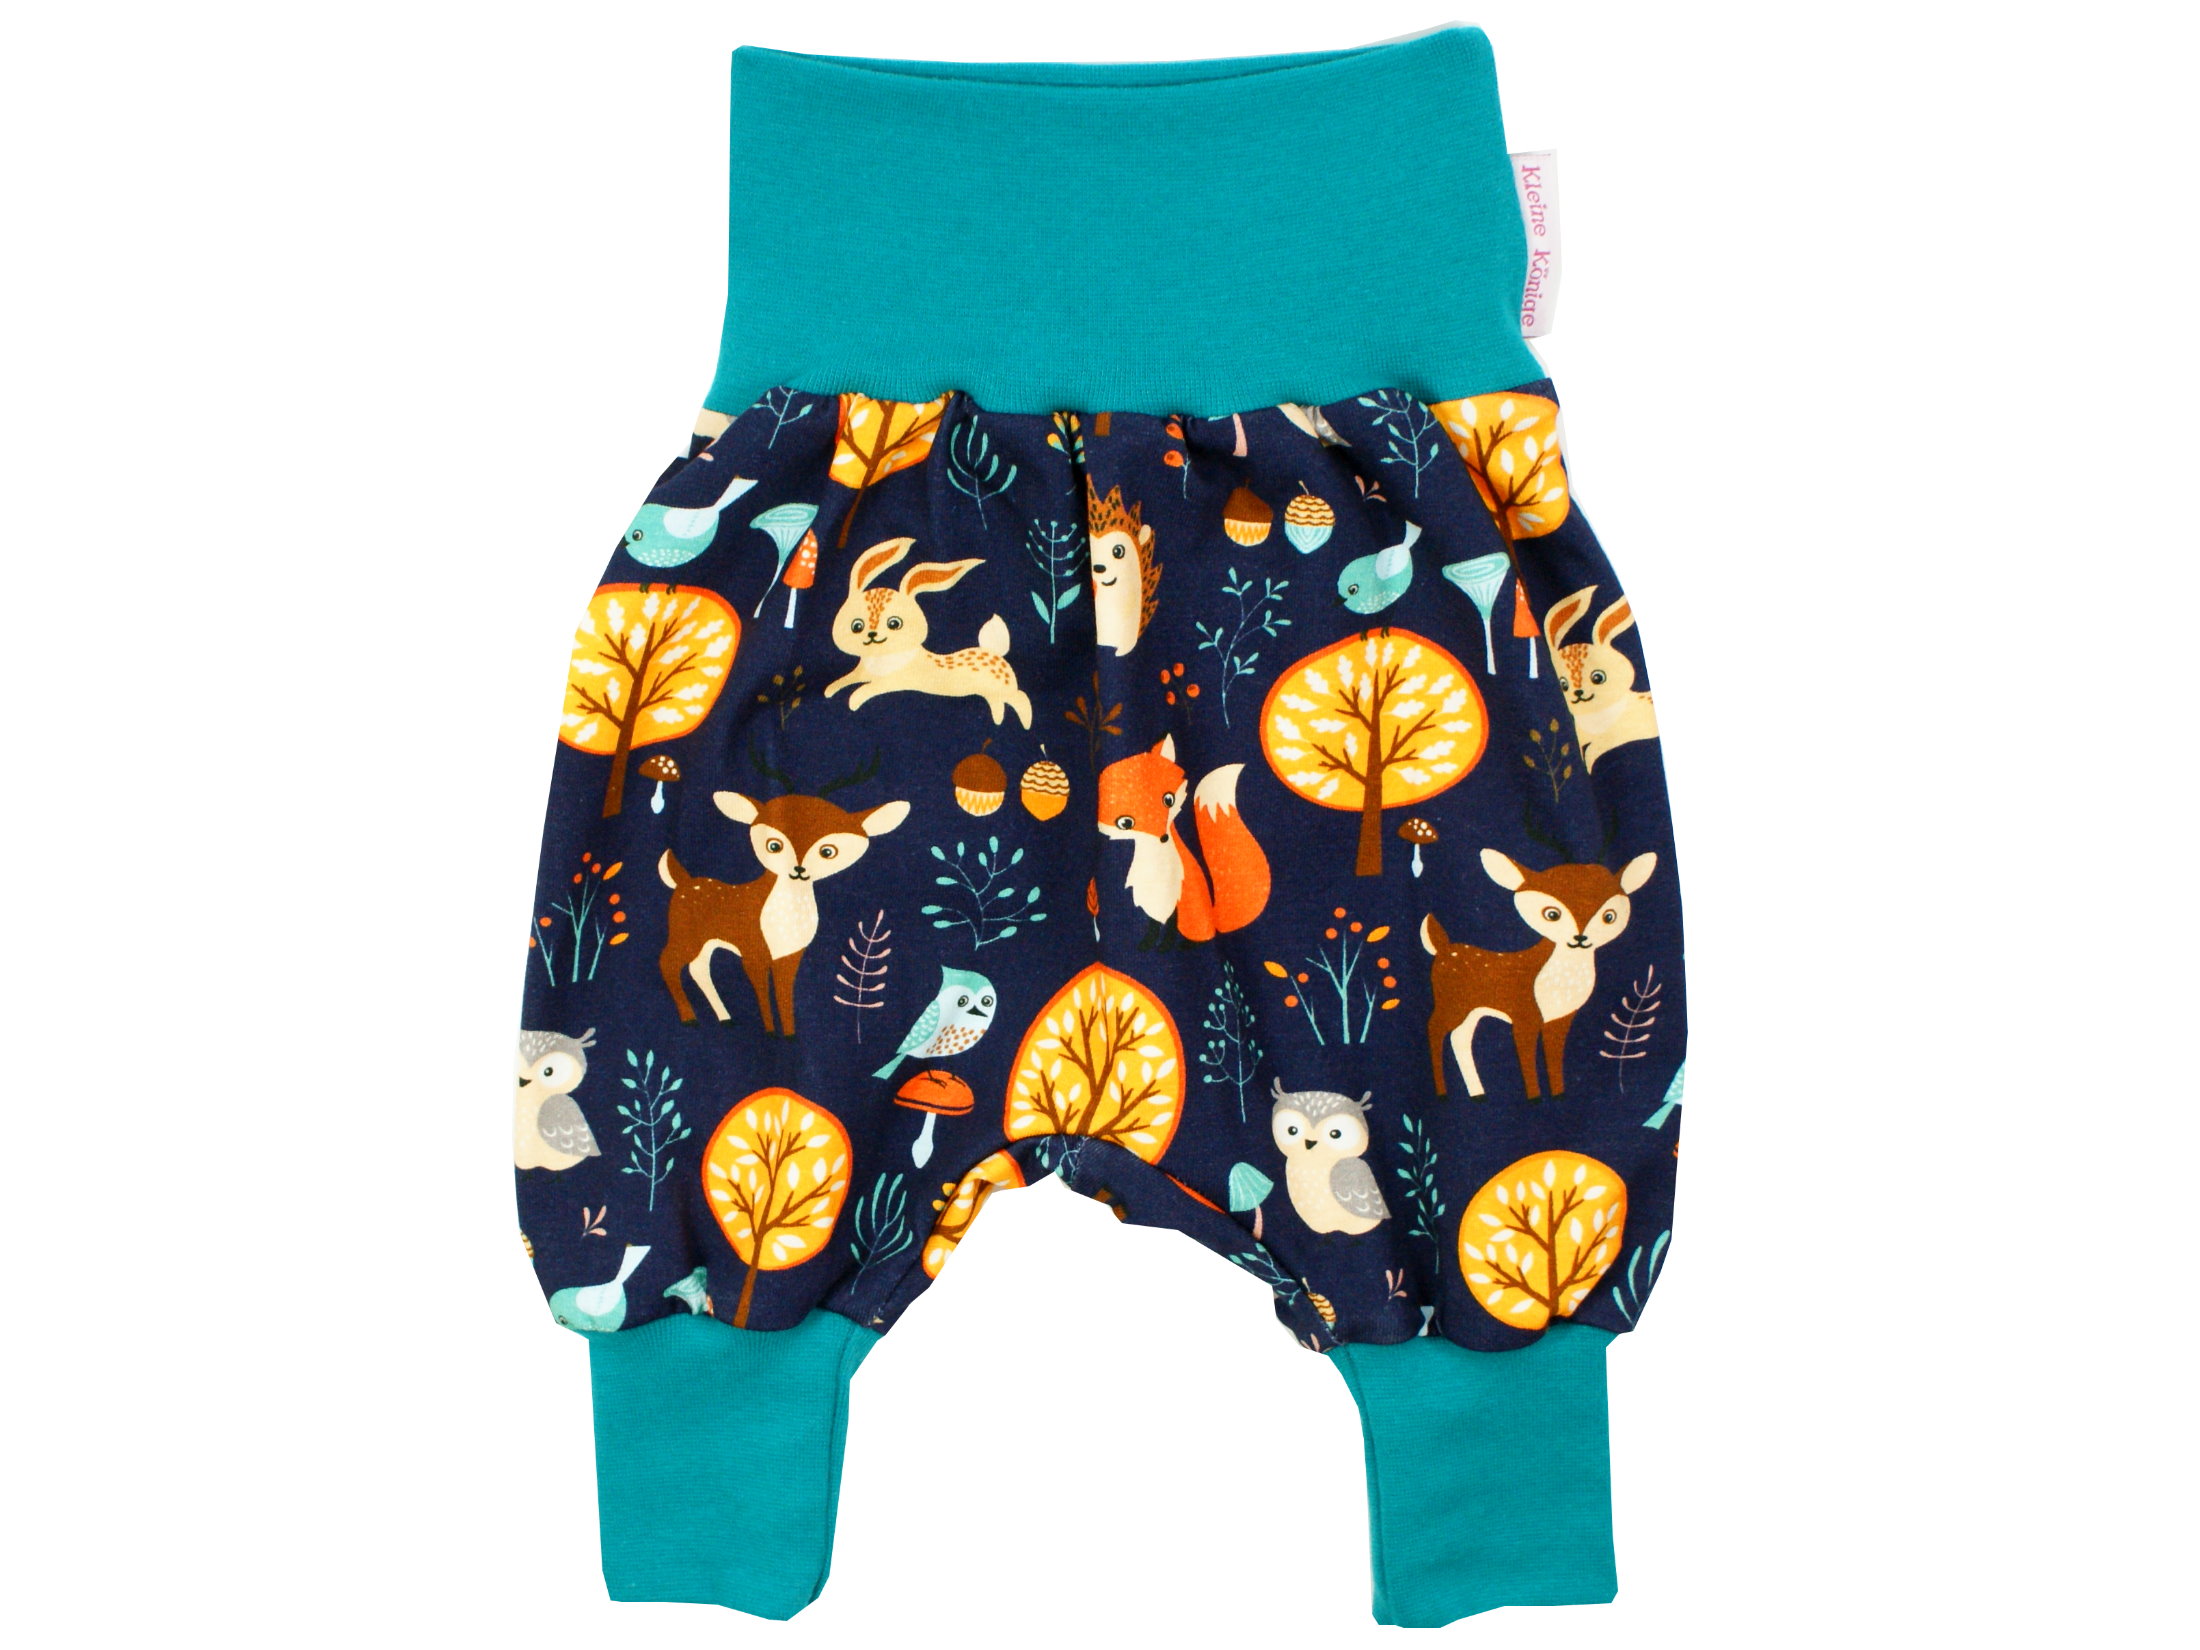 Kleine Könige Kurze Pumphose Baby Jungen Shorts · Modell Äffchen türkis braun · Ökotex 100 Zertifiziert · Größen 50-152